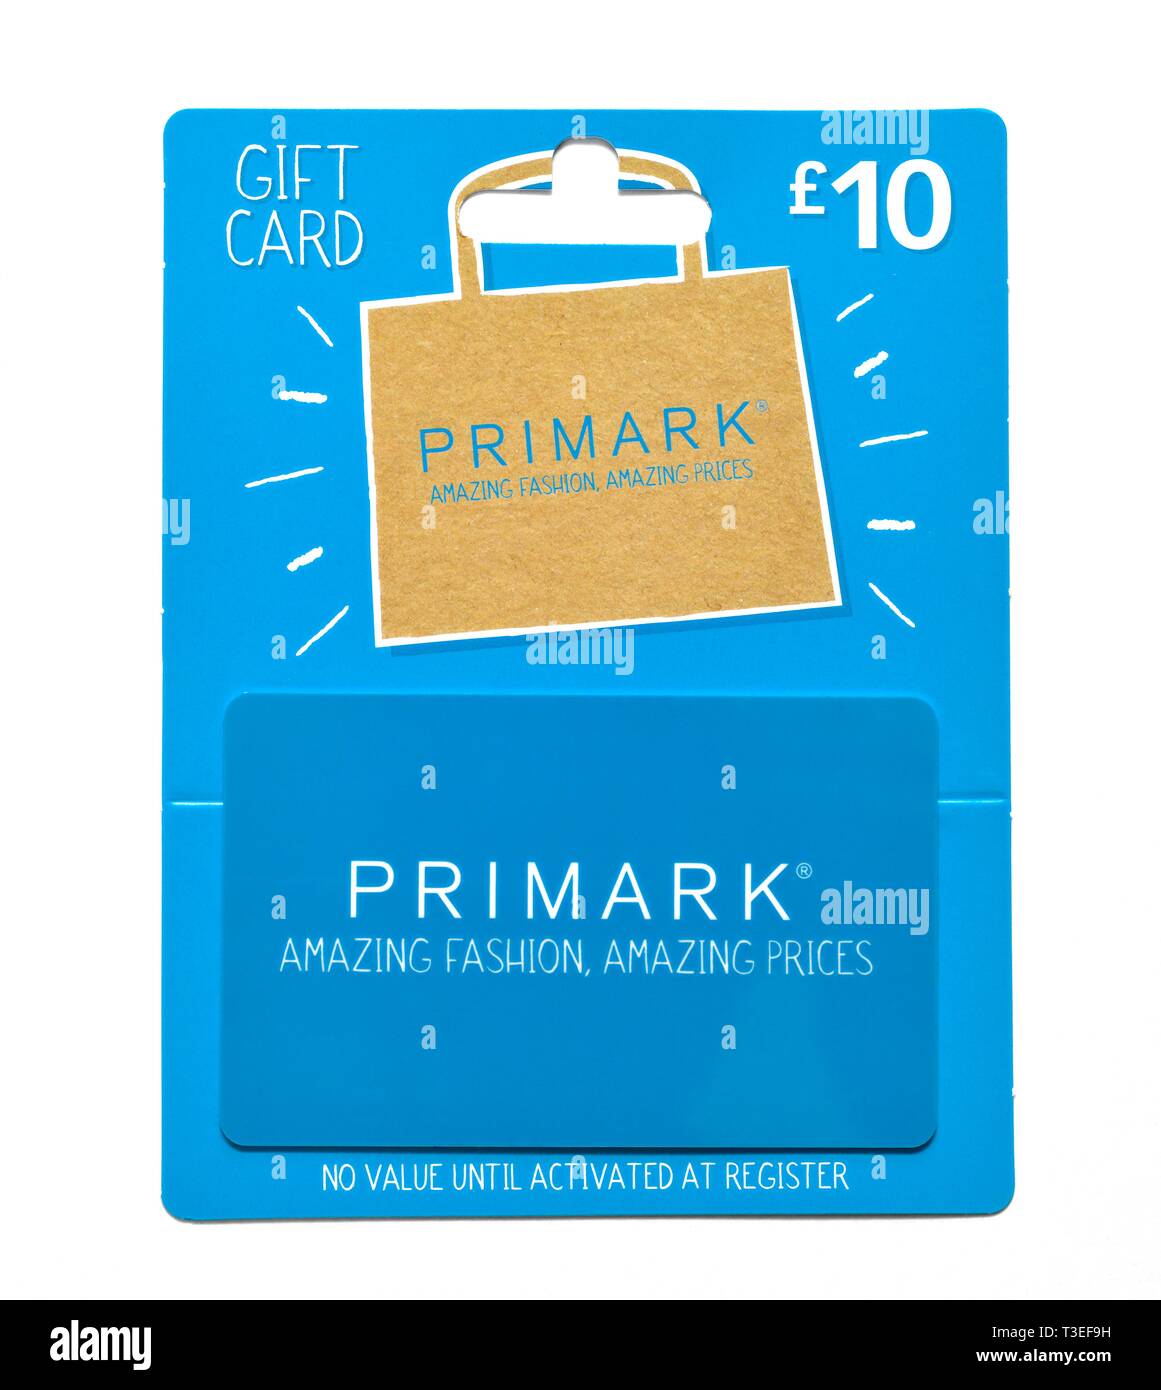 Primark £10 gift card Stock Photo - Alamy